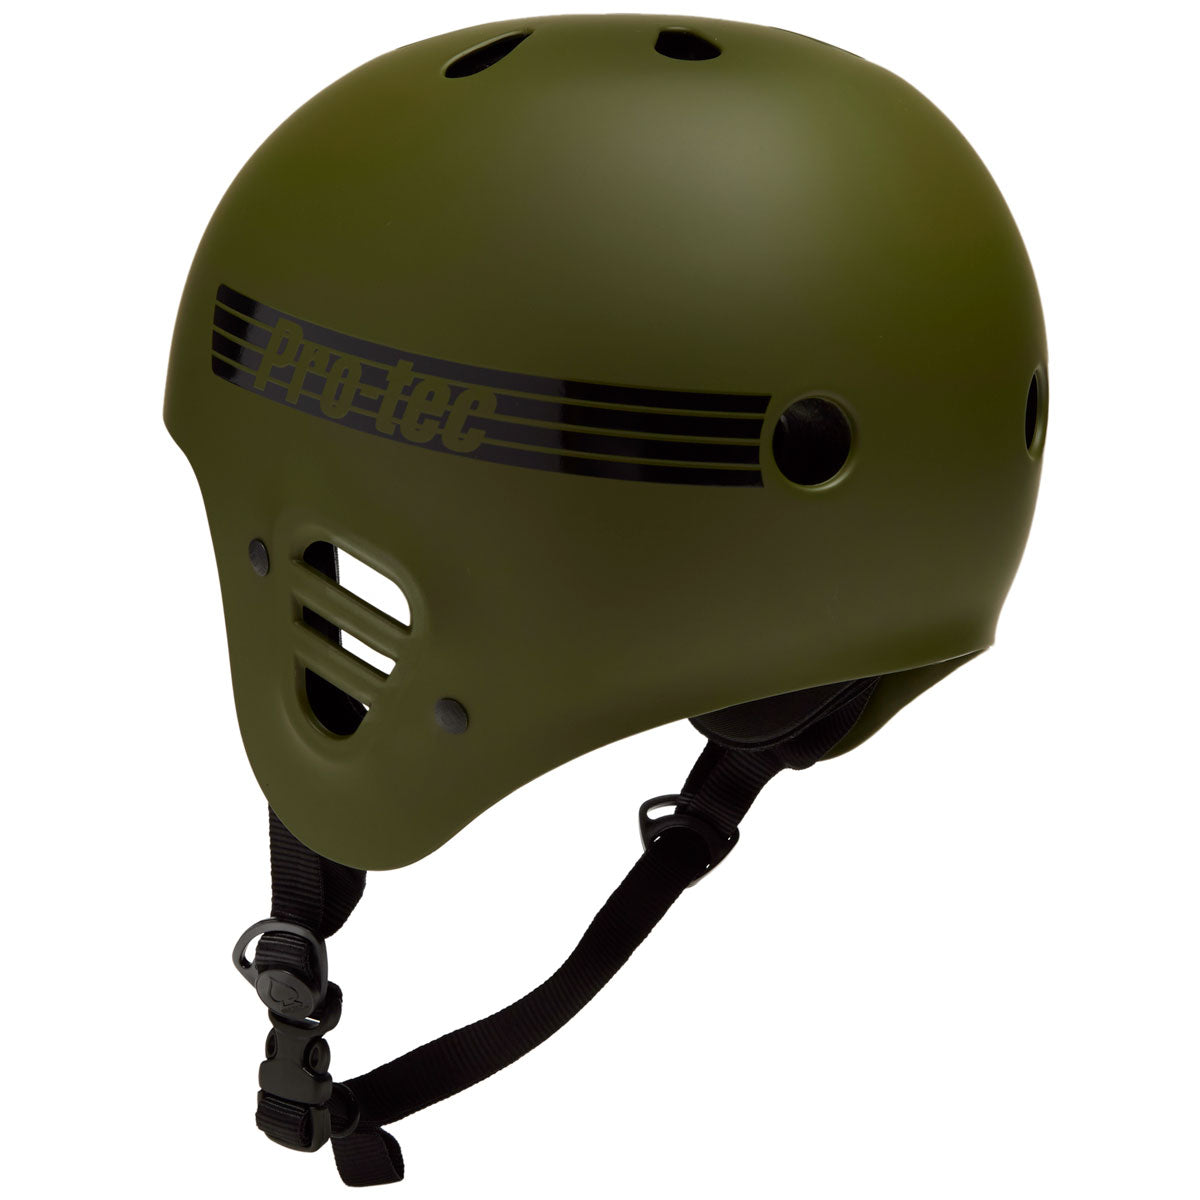 Pro-Tec Full Cut Certified Helmet - Matte Olive image 2